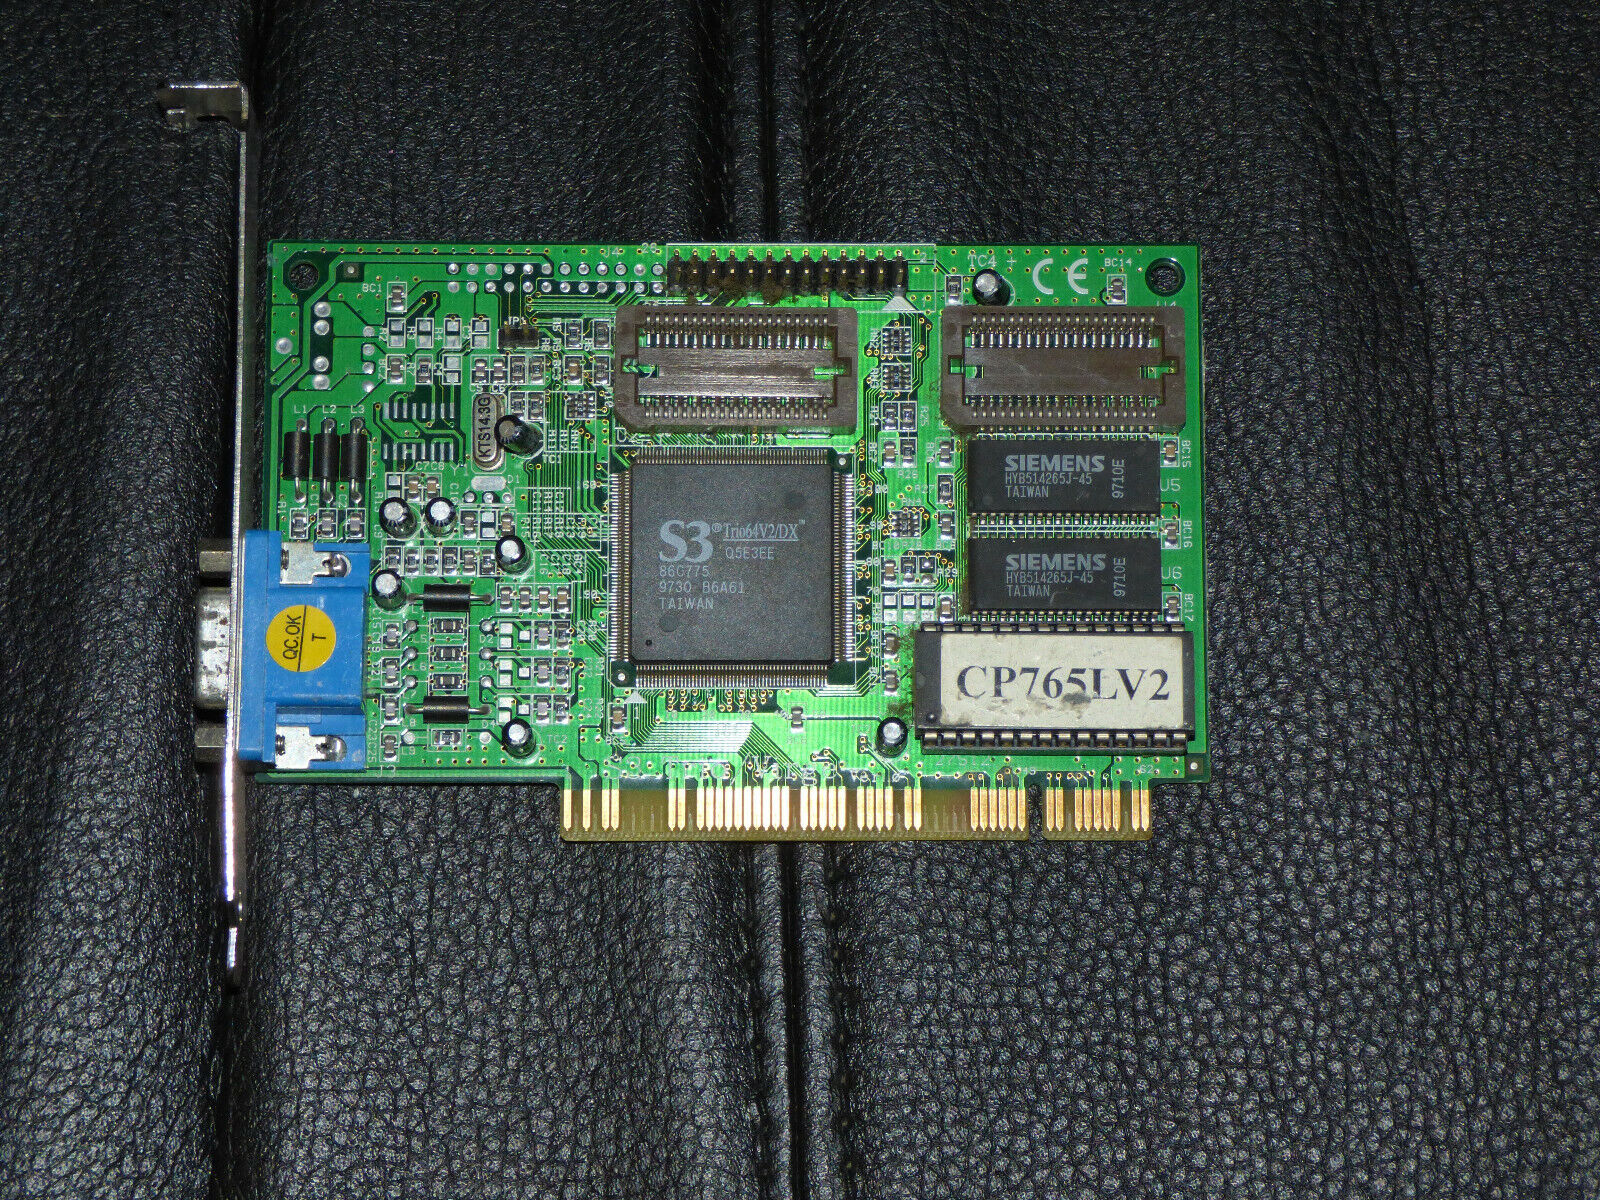 S3 TRIO 64 V2/DX PCI VGA GRAPHICS CARD TESTED